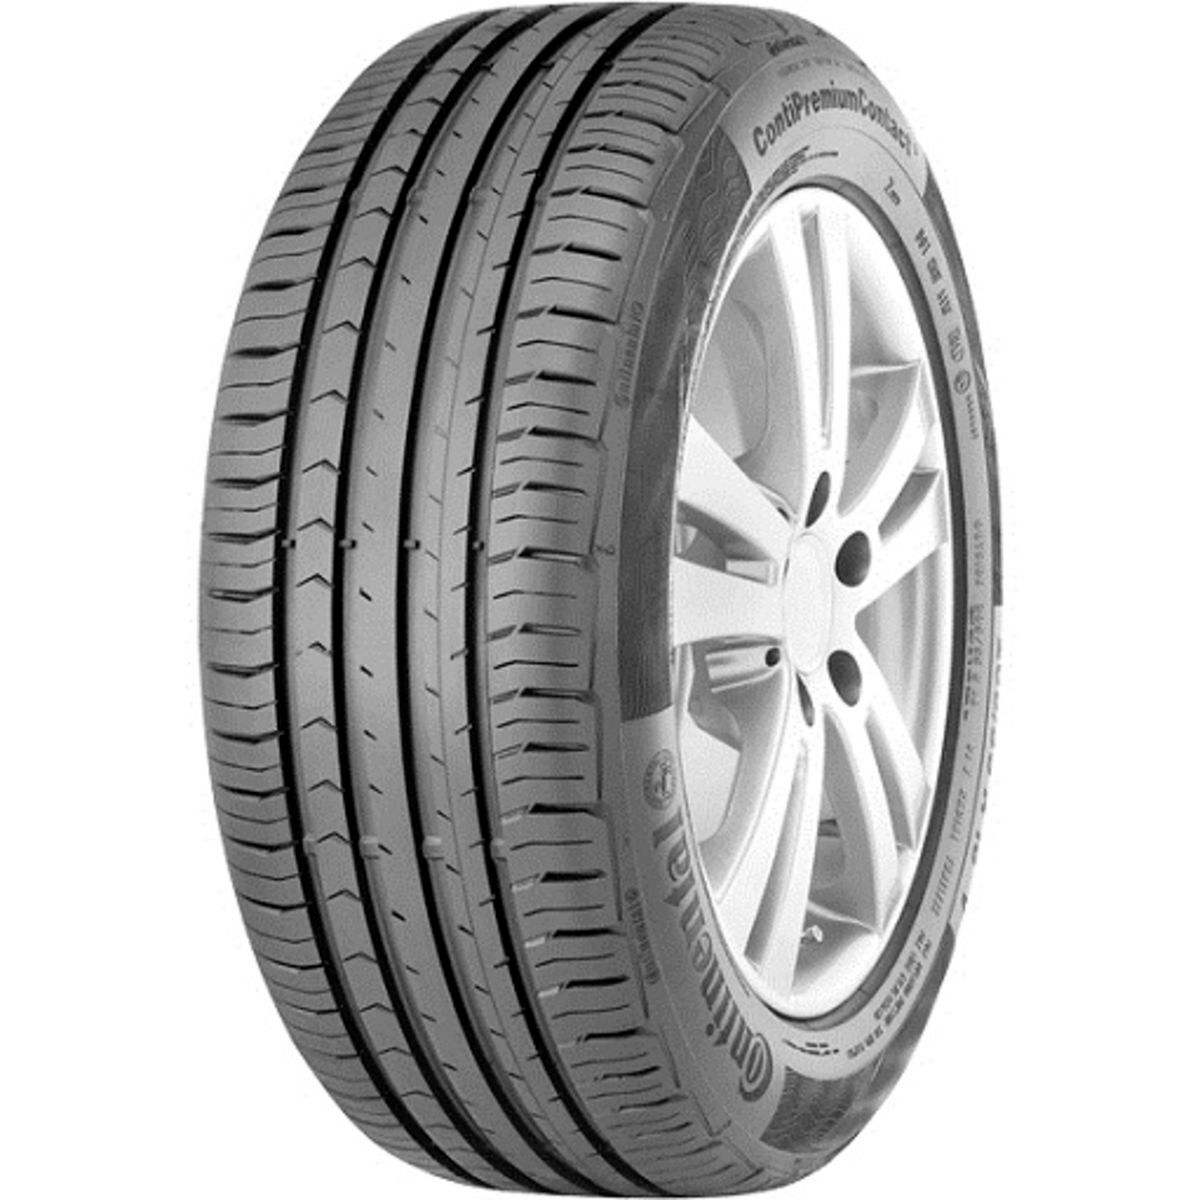 Neumáticos de verano CONTINENTAL ContiPremiumContact 5 215/55R17 94W